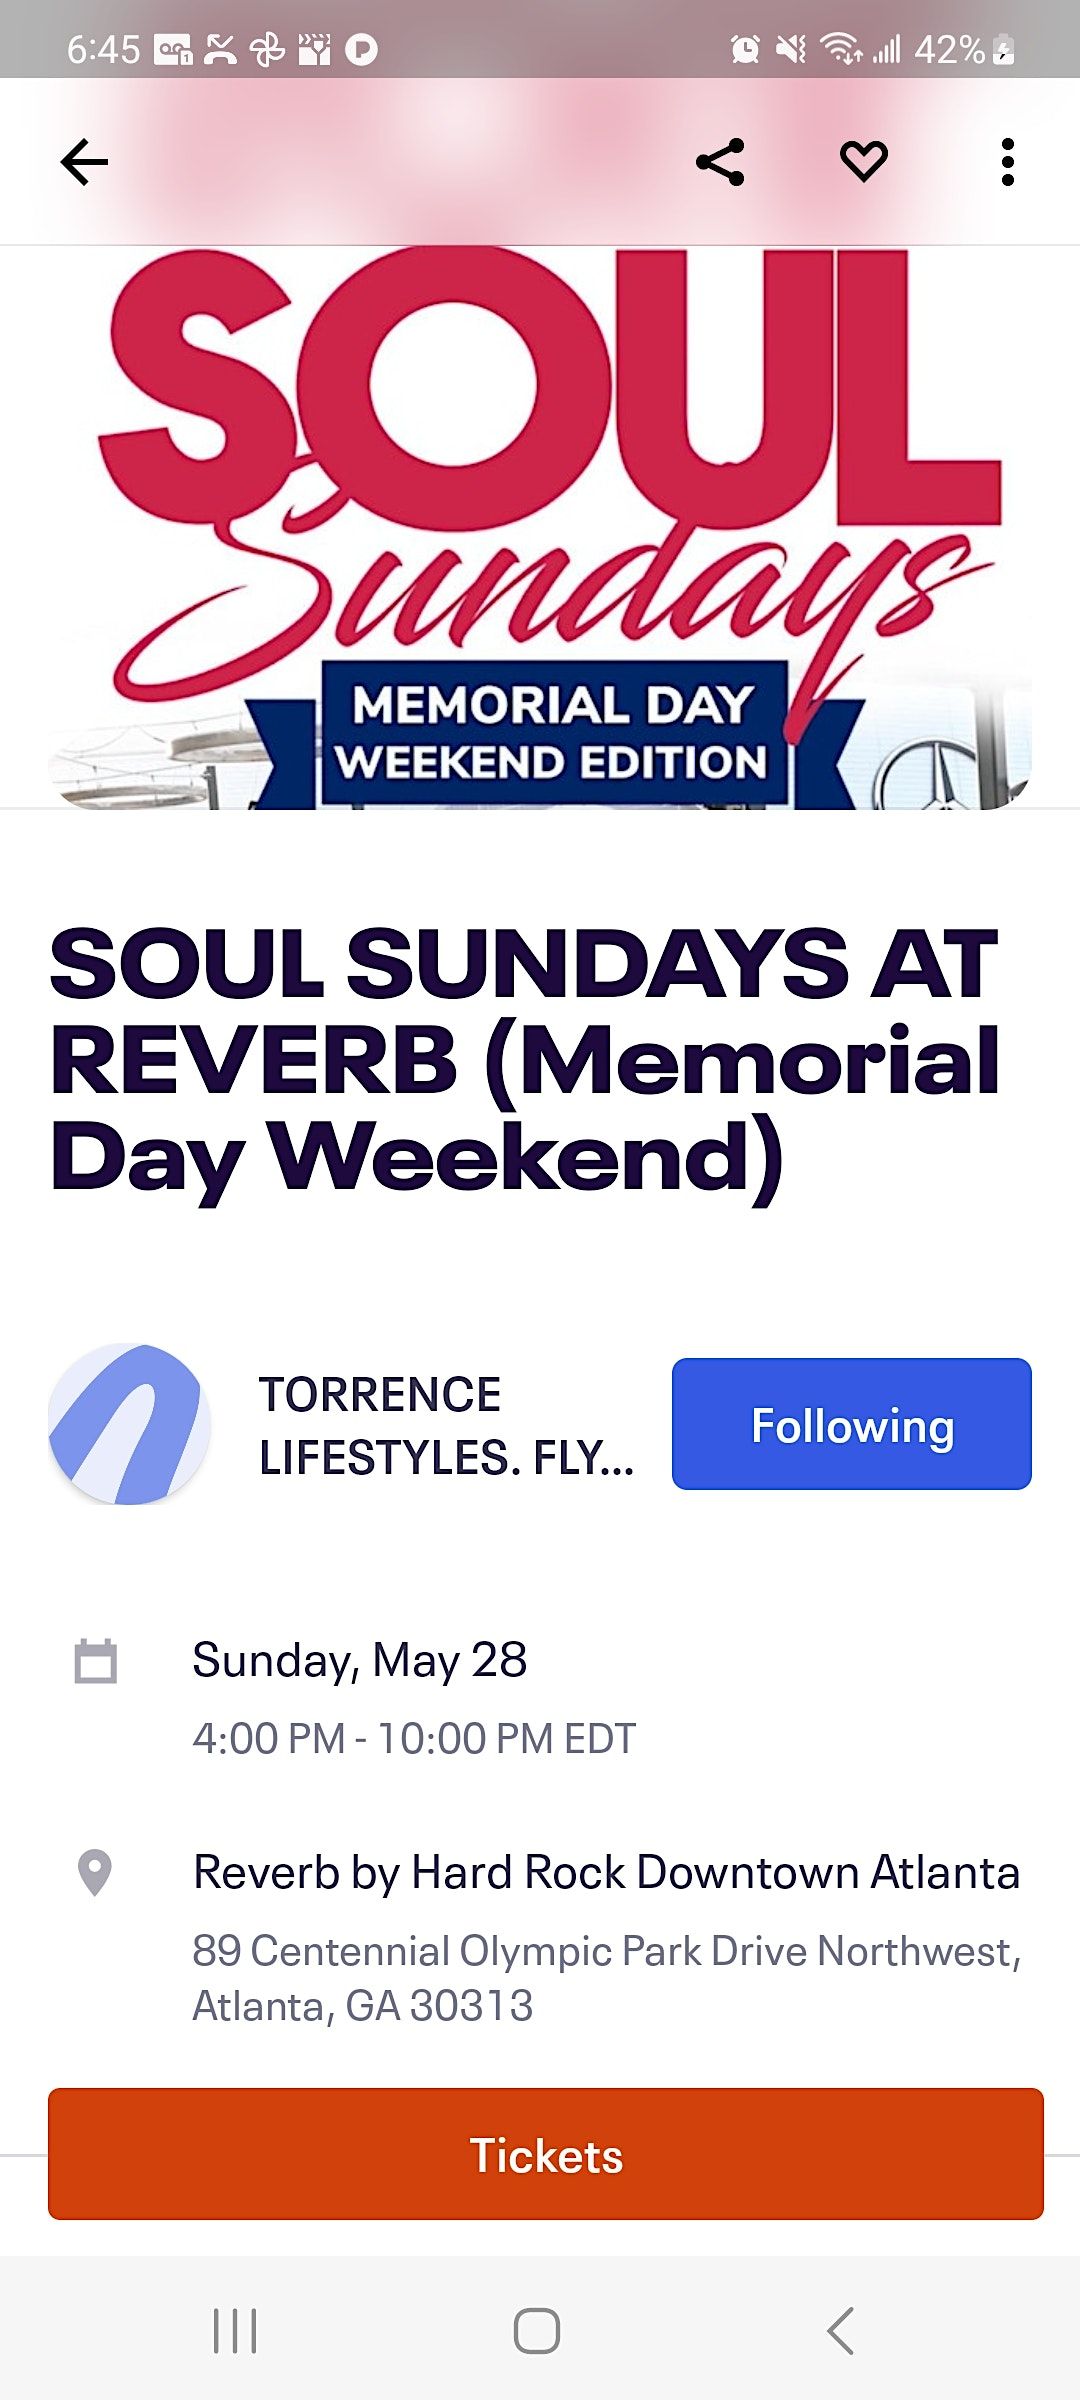 SOUL SUNDAYS AT REVERB (MEMORIAL DAY WEEKEND )